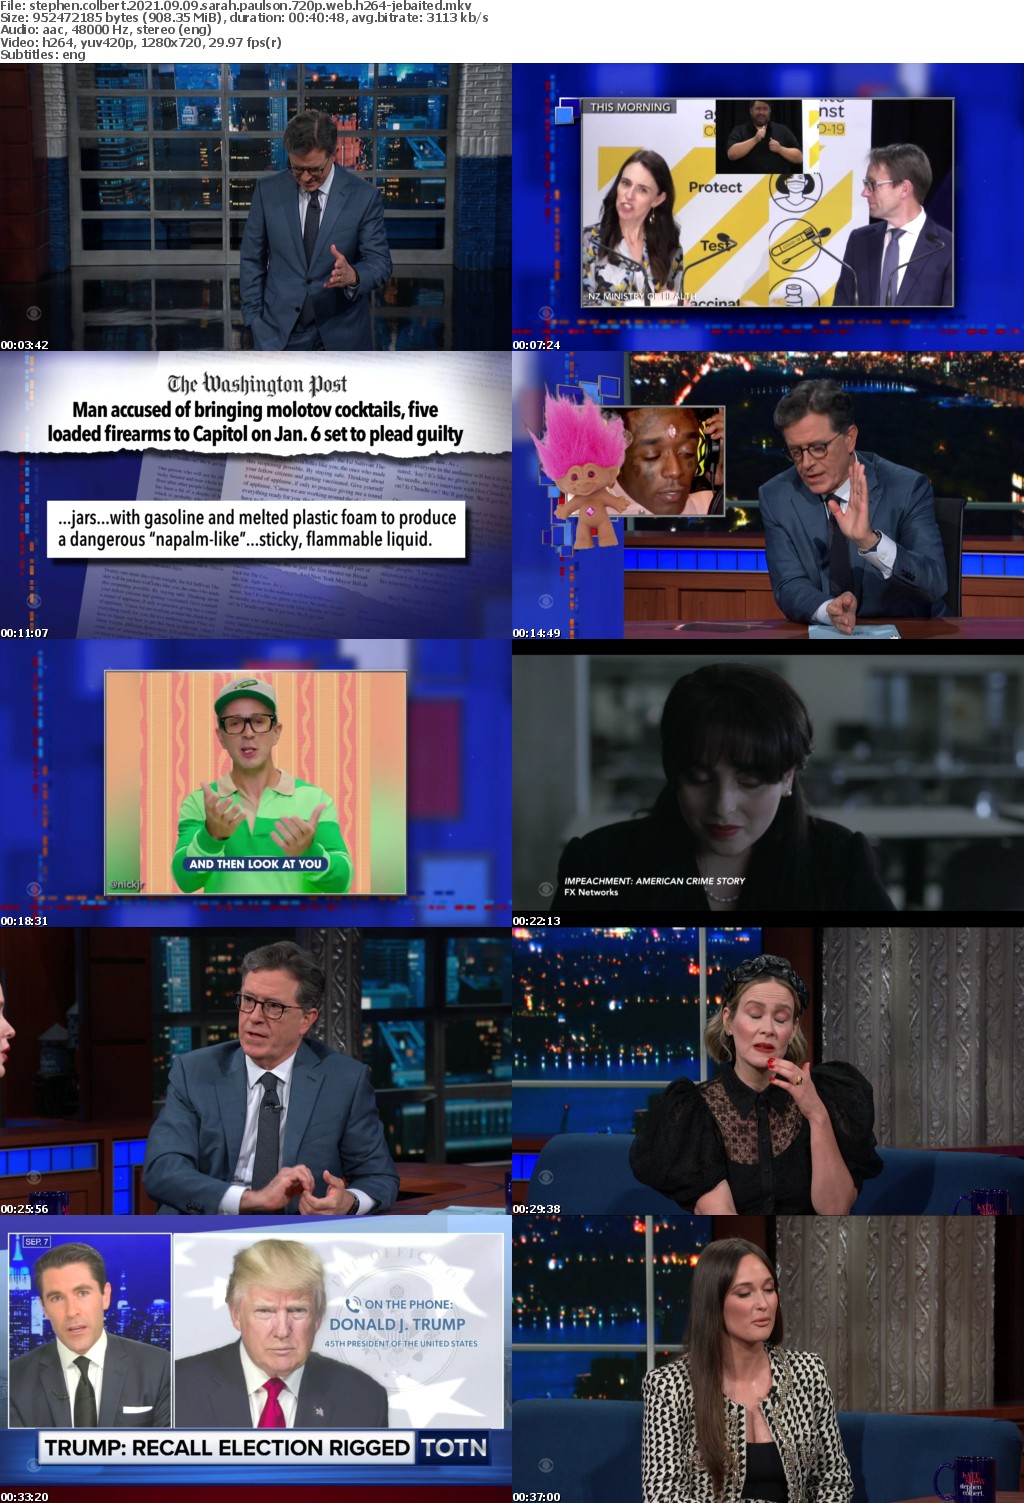 Stephen Colbert 2021 09 09 Sarah Paulson 720p WEB H264-JEBAITED